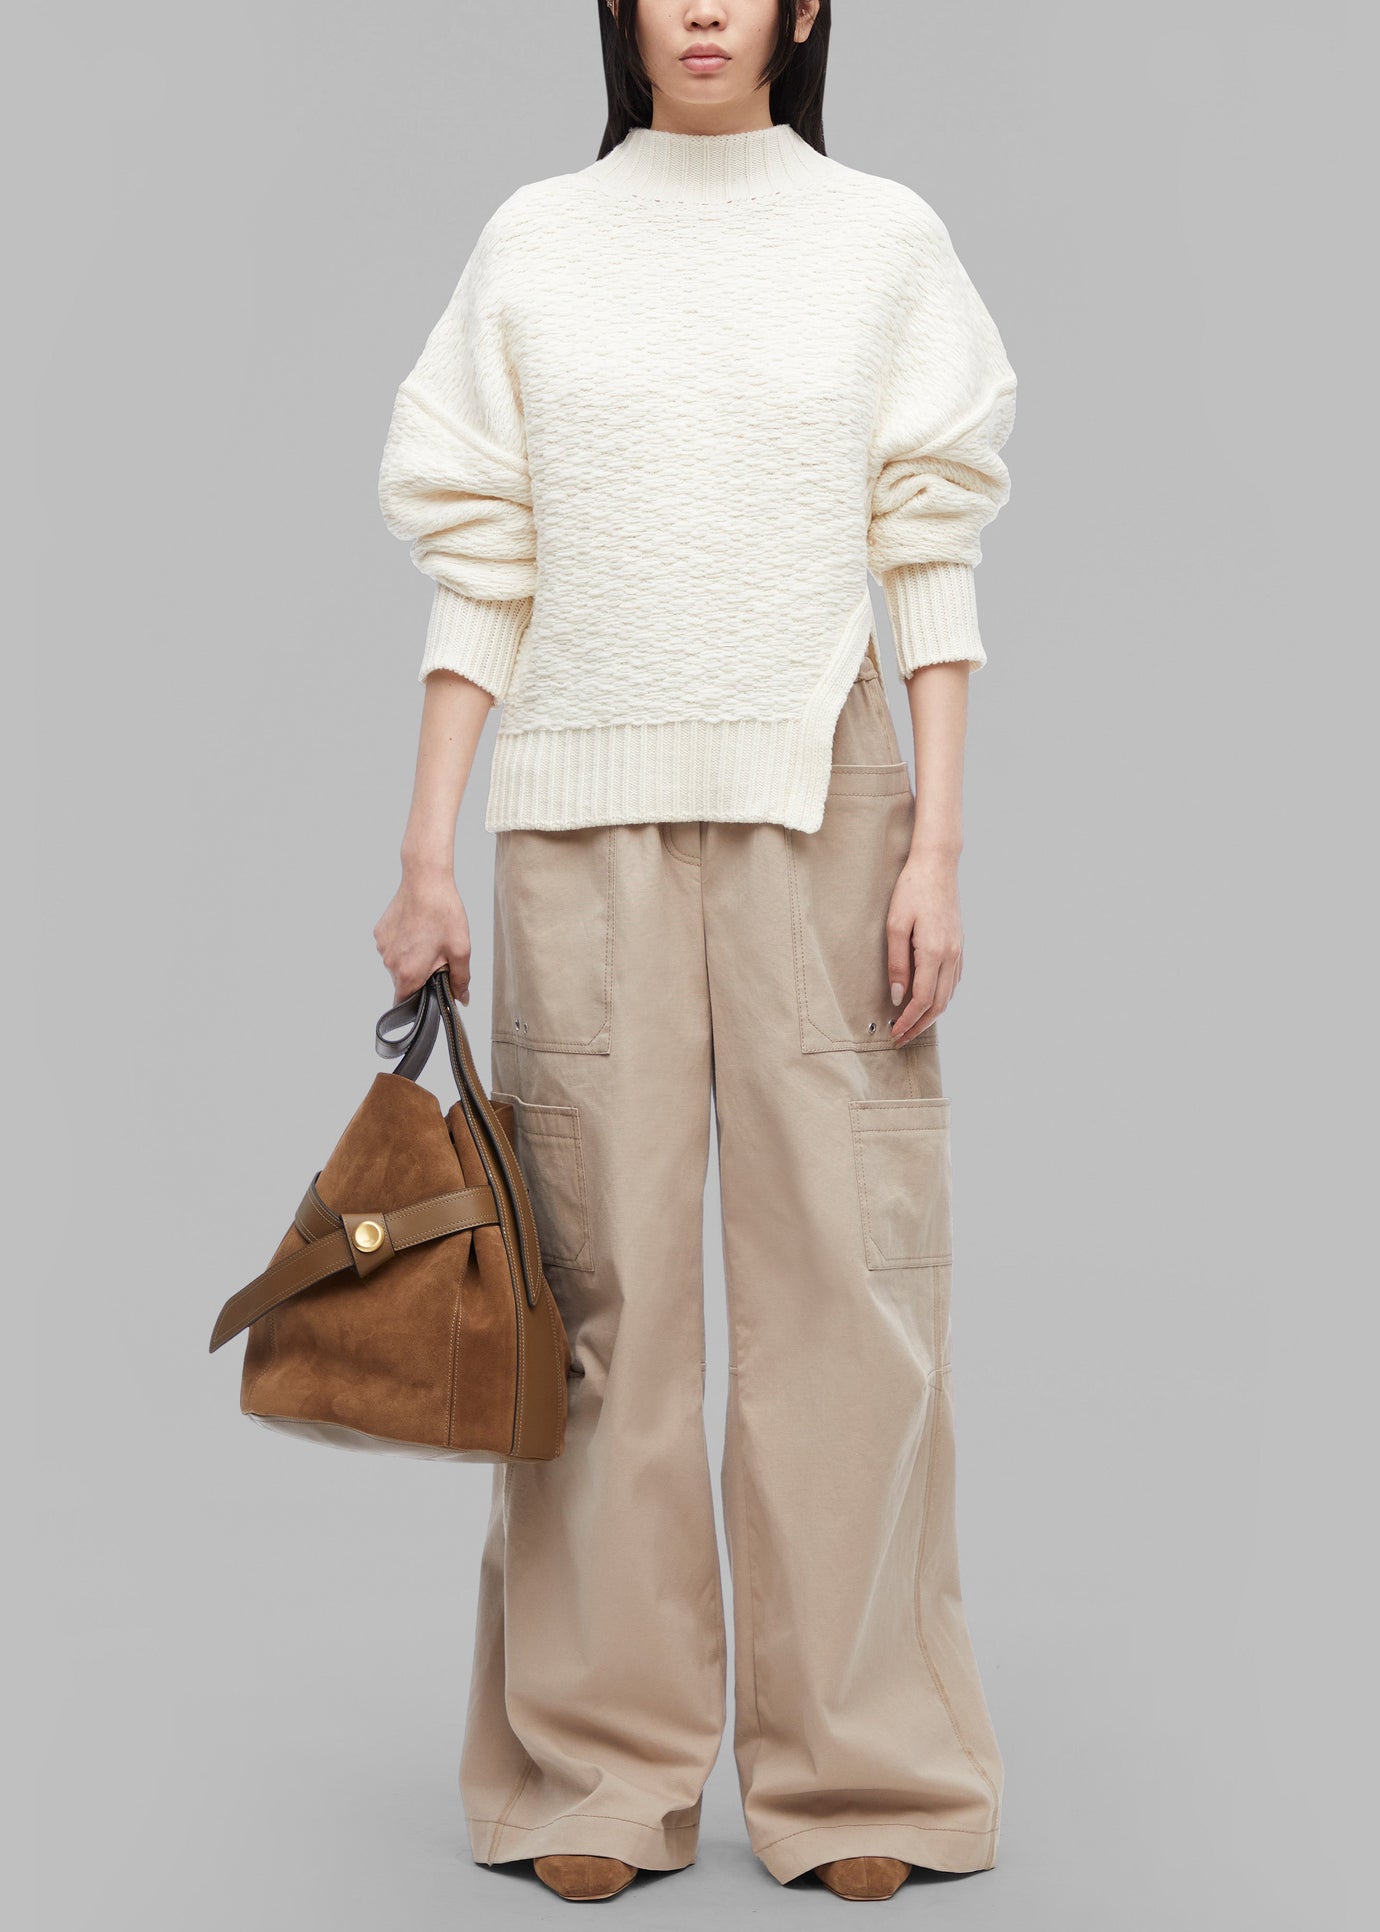 3.1 Phillip Lim Wool Jacquard Turtleneck Sweater - Ivory